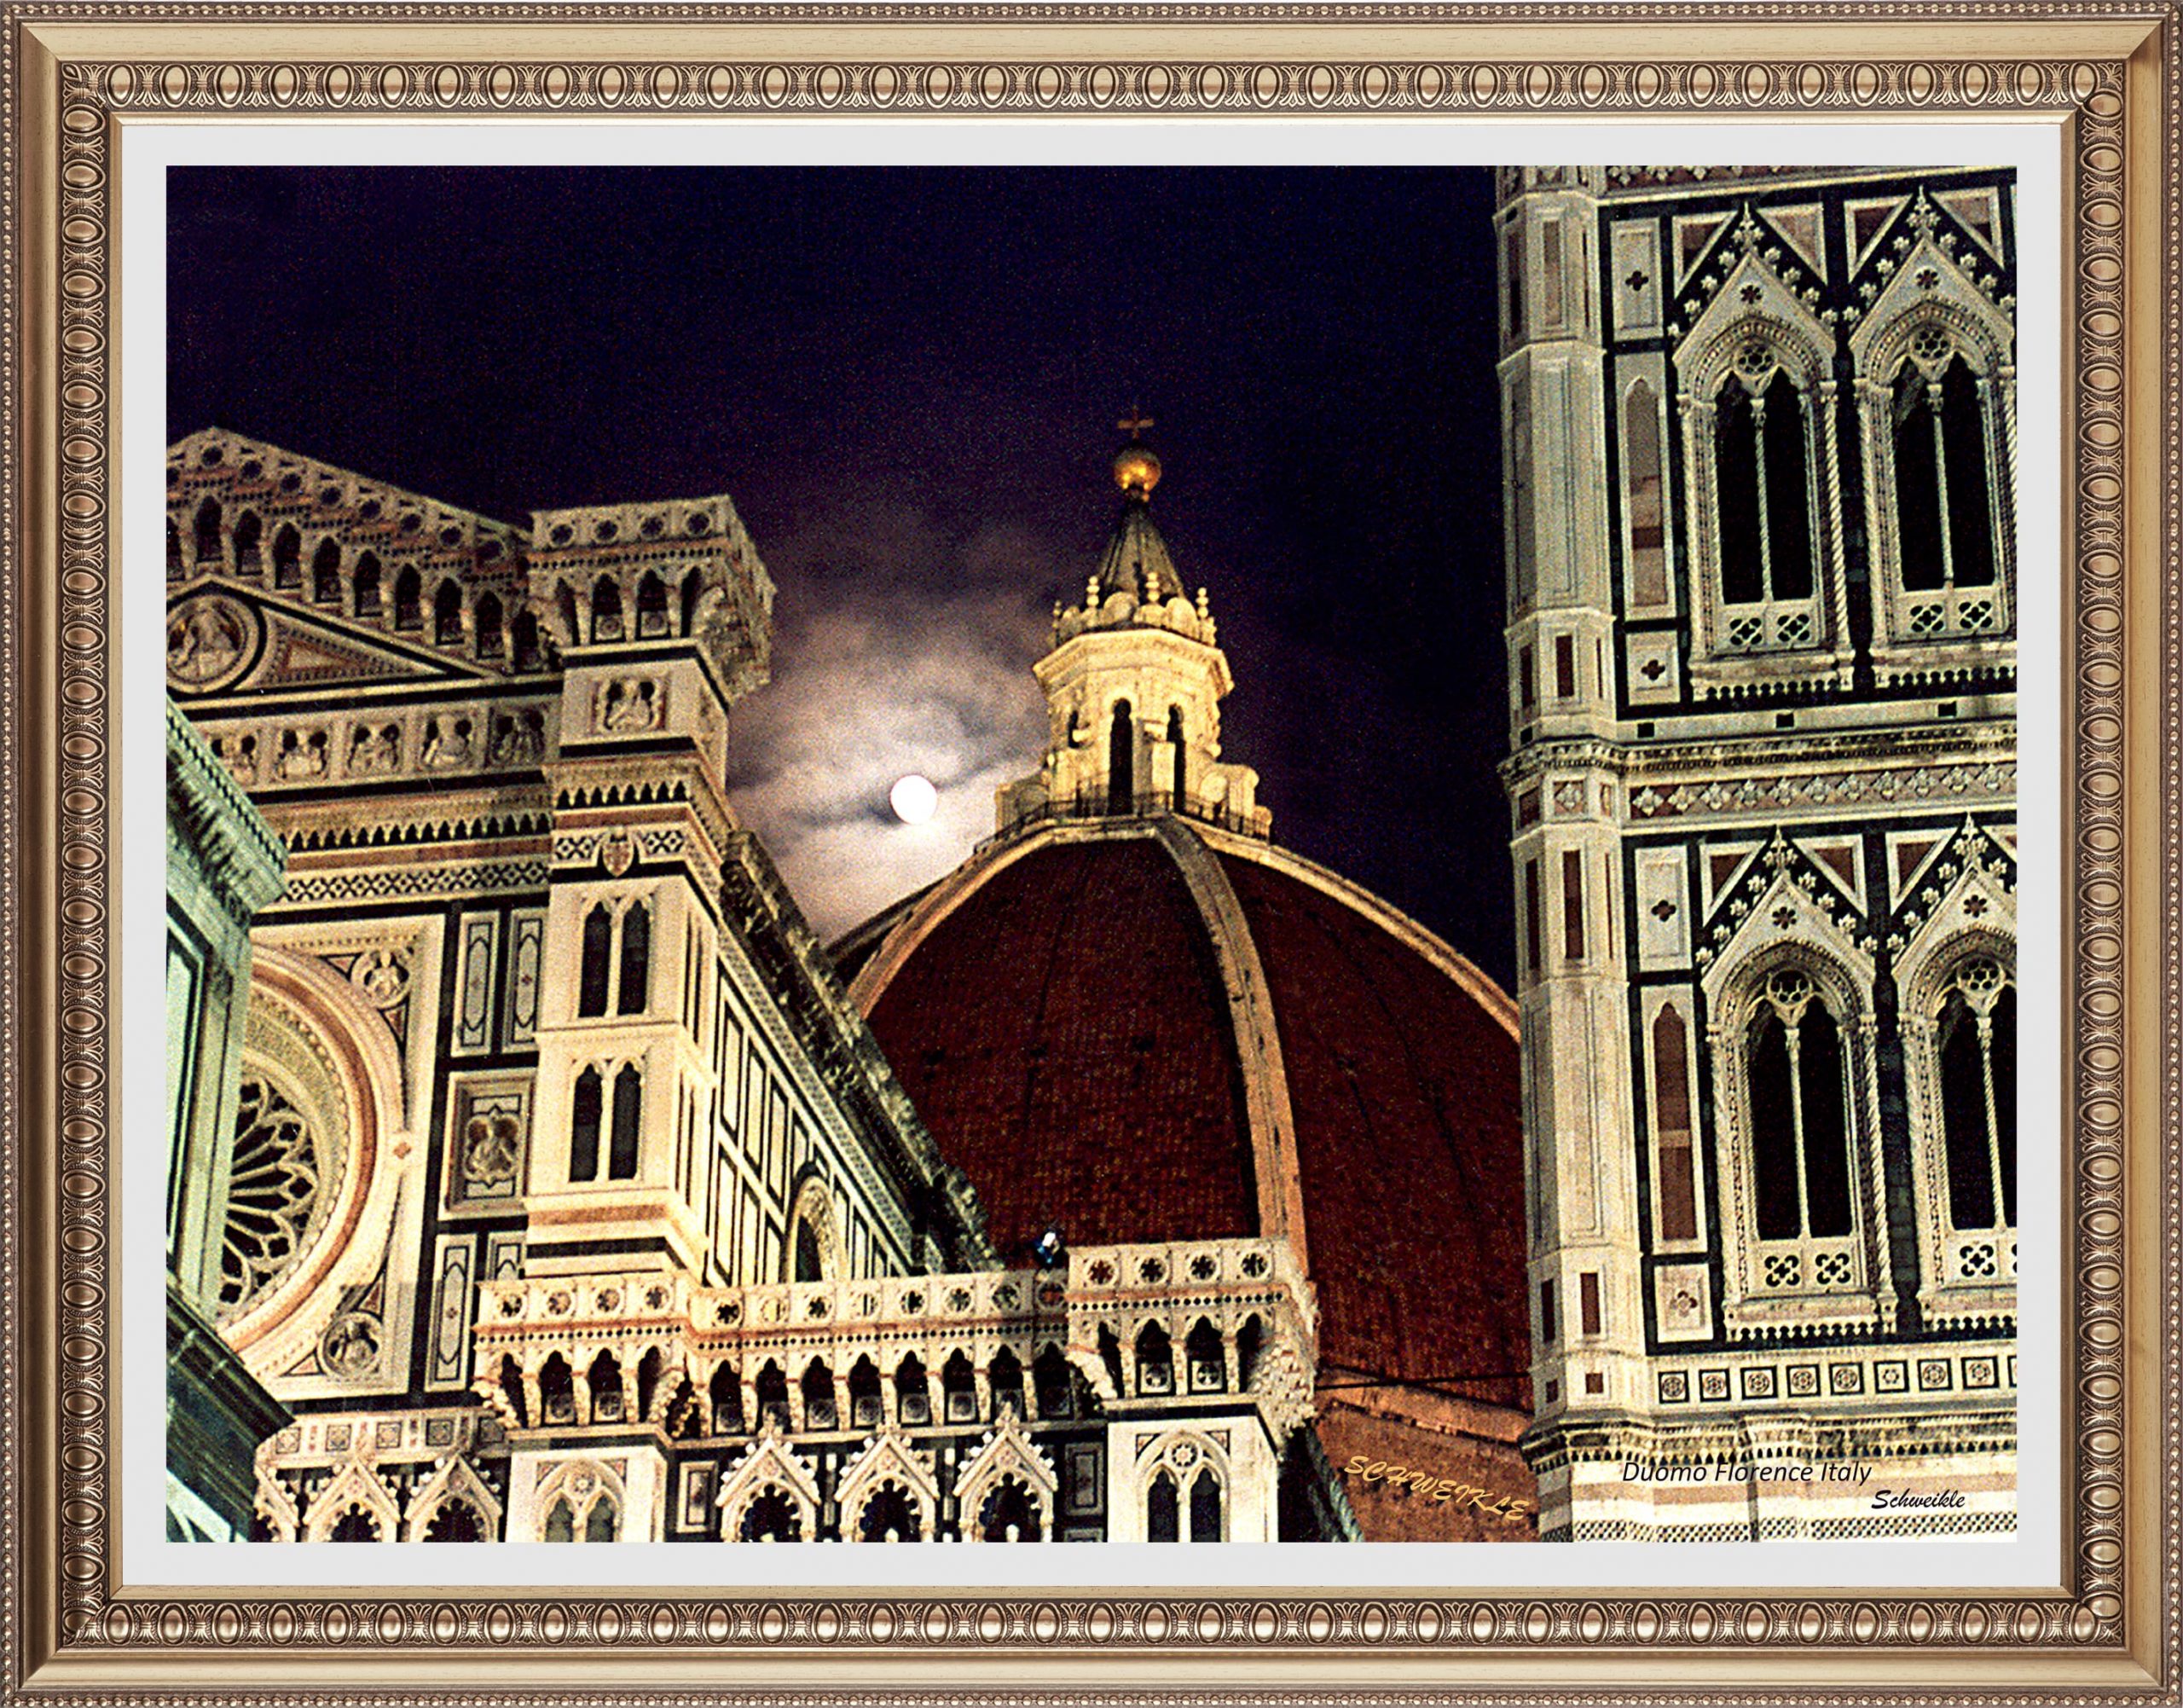 Duomo - Florence Italy